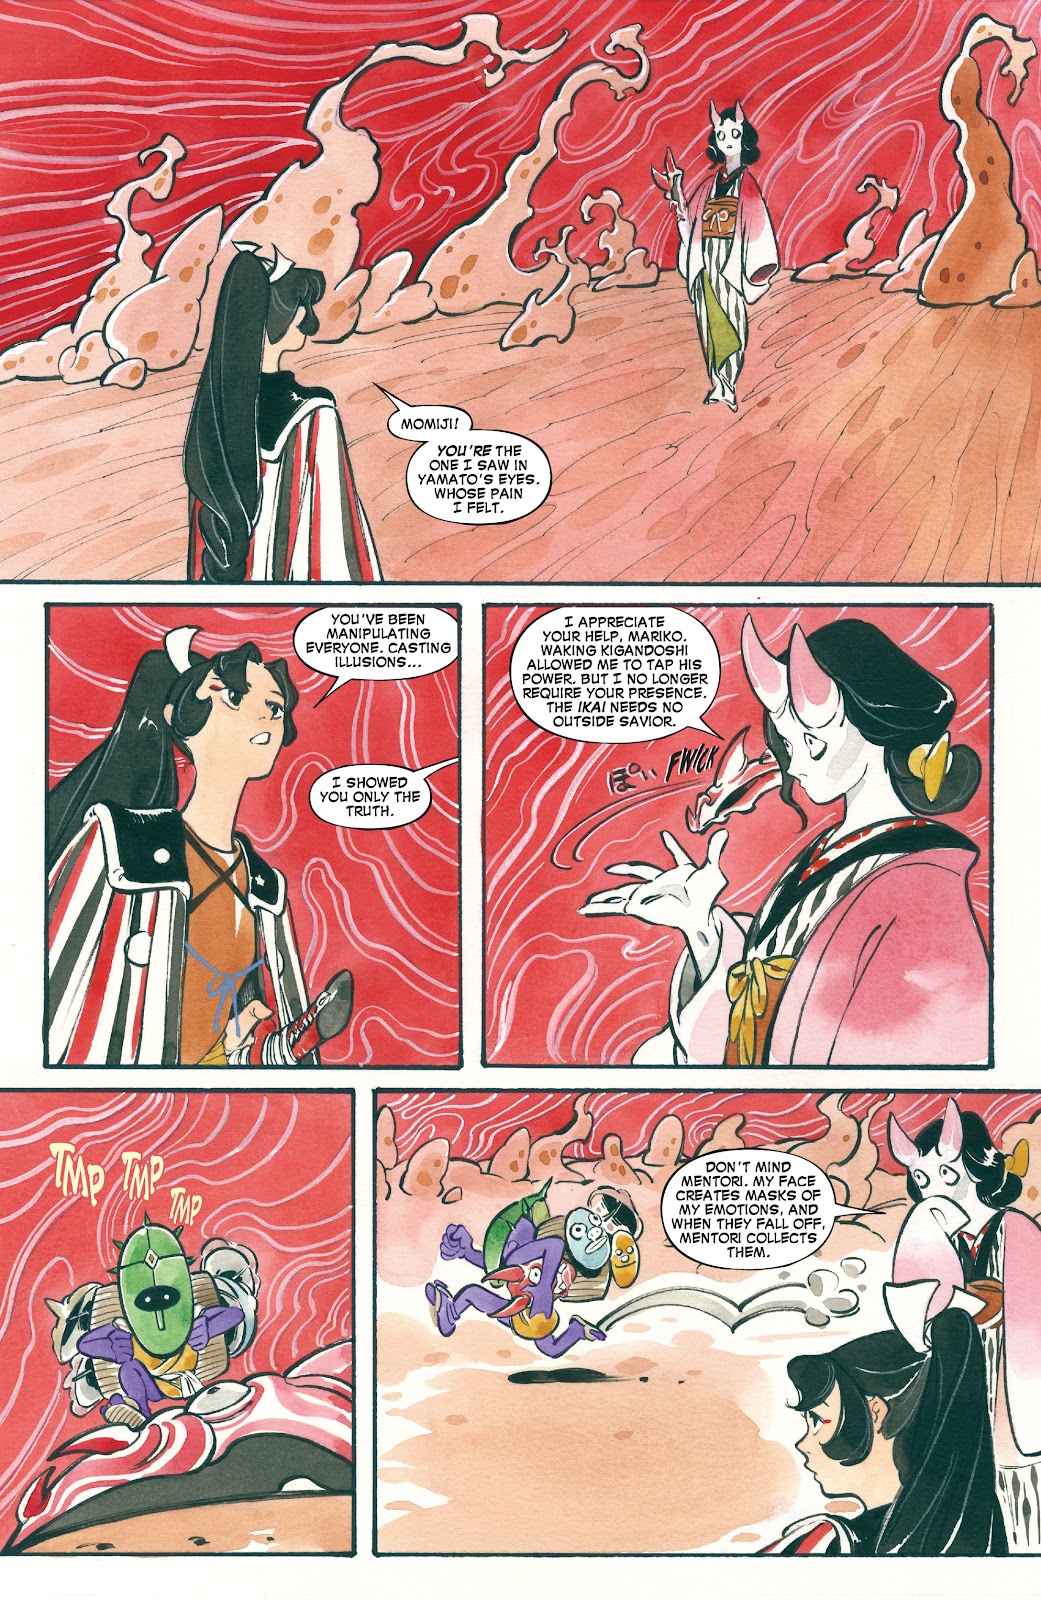 Demon Wars: Scarlet Sin issue 1 - Page 4